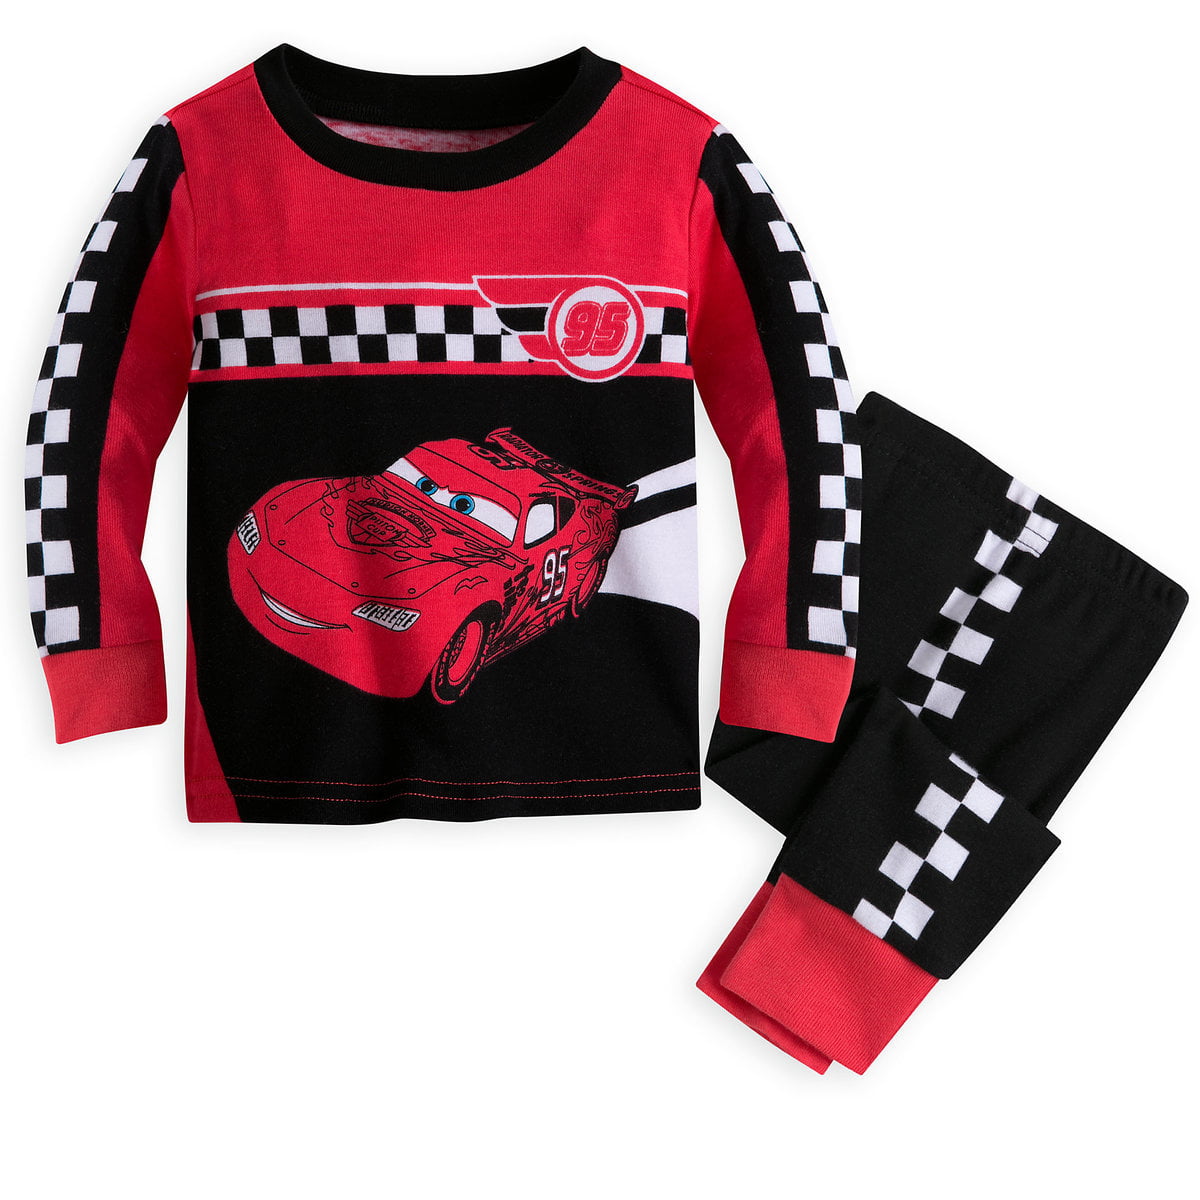 Ex Chain Store Boys Official Cars Lightning McQueen Pyjamas Pajamas  2 3 4 5 6 7 